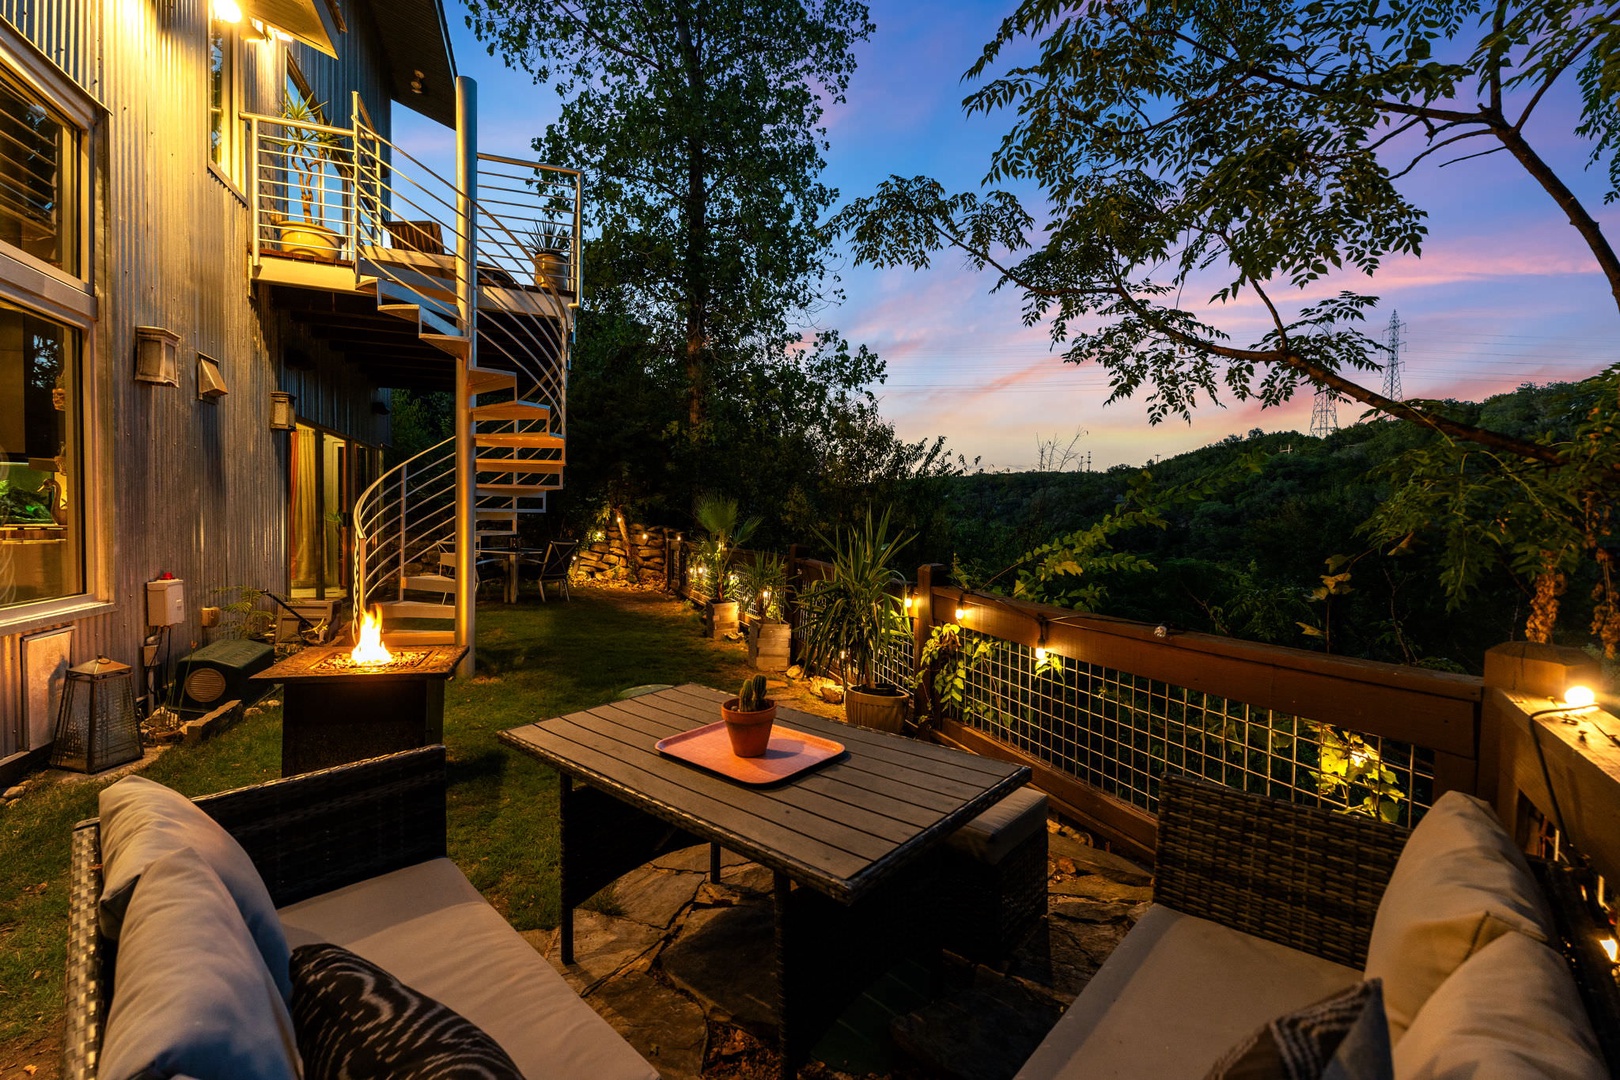 Enjoy a nightcap on the large back deck